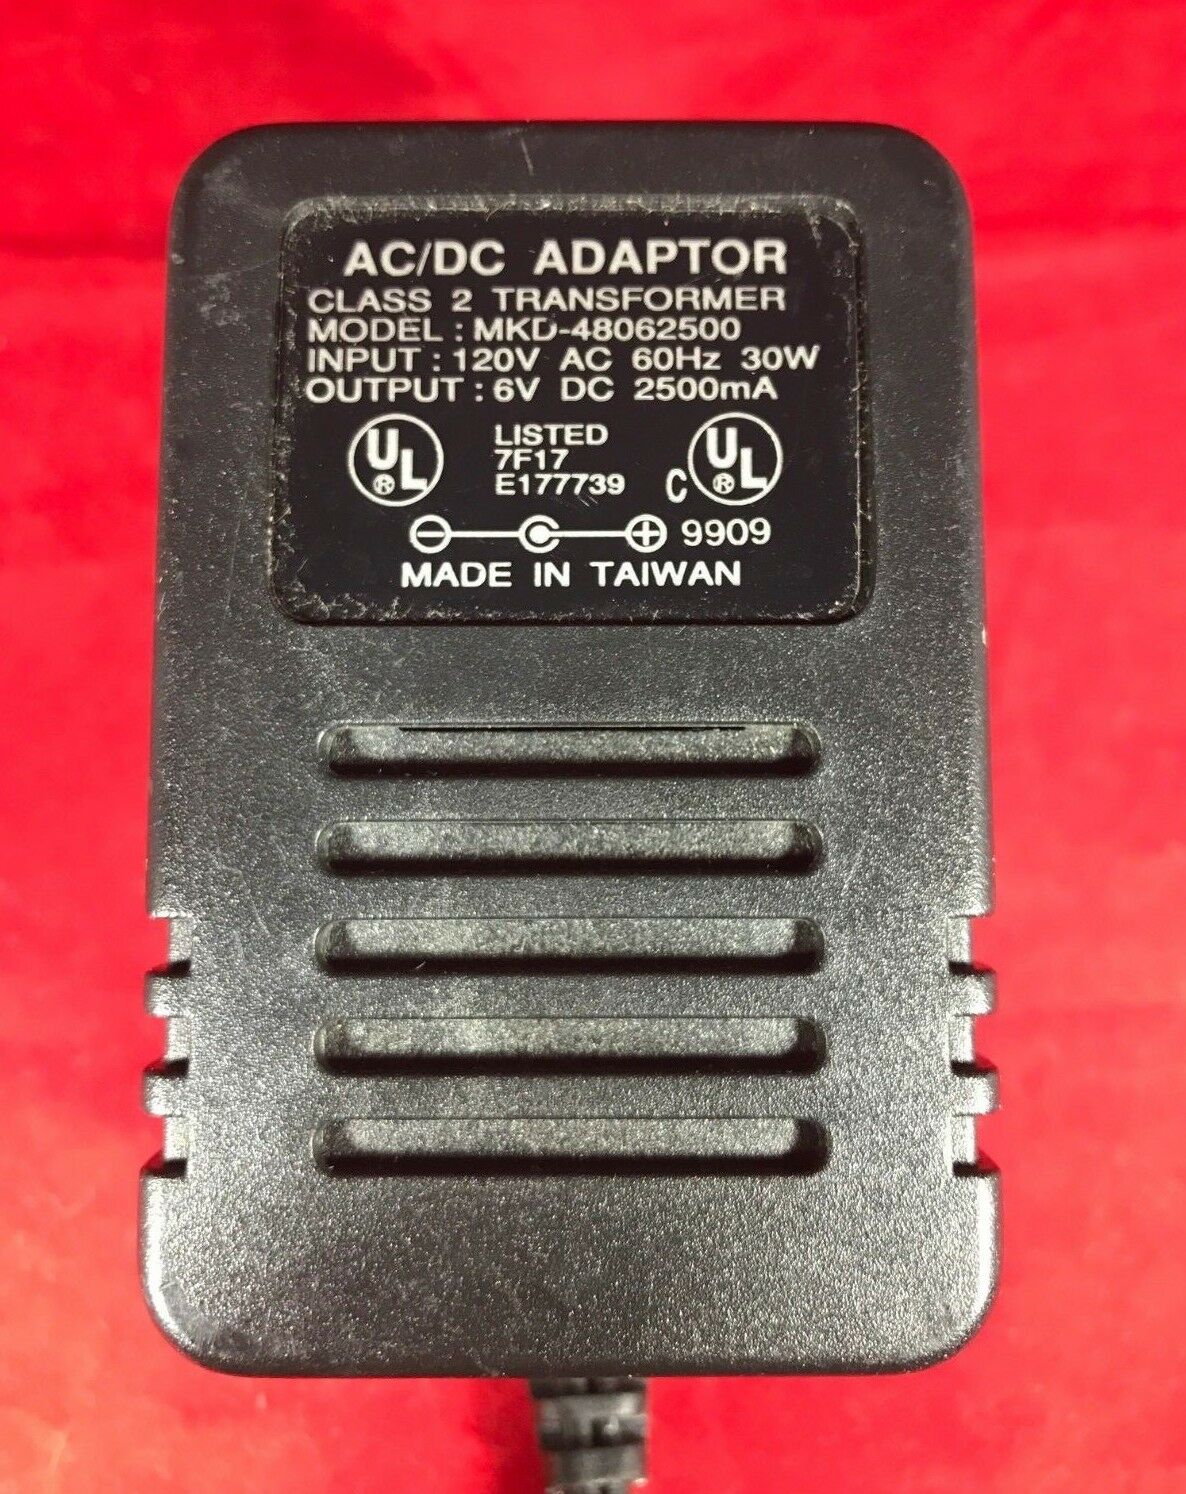 *Brand NEW* MKD-48062500 Class 2 Transformer 6V 2500mA Ac Adapter - Click Image to Close